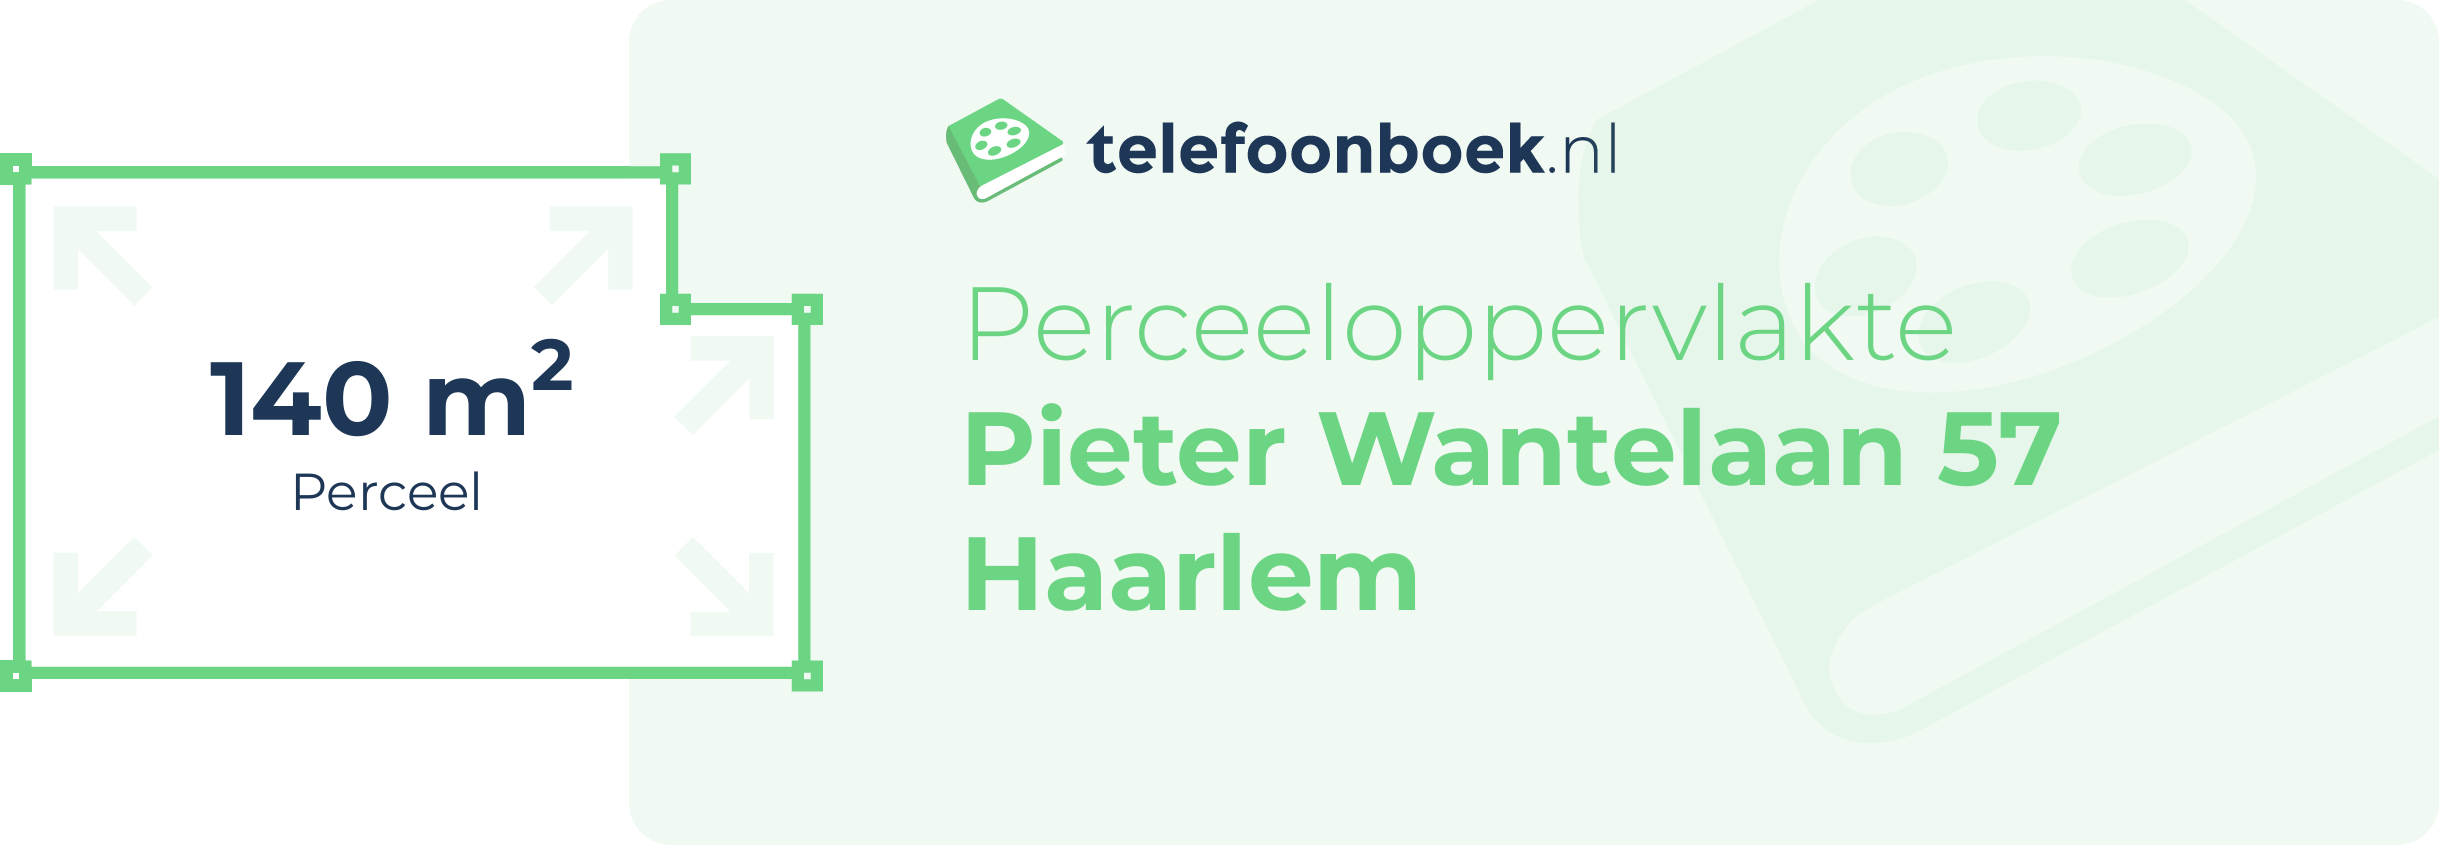 Perceeloppervlakte Pieter Wantelaan 57 Haarlem